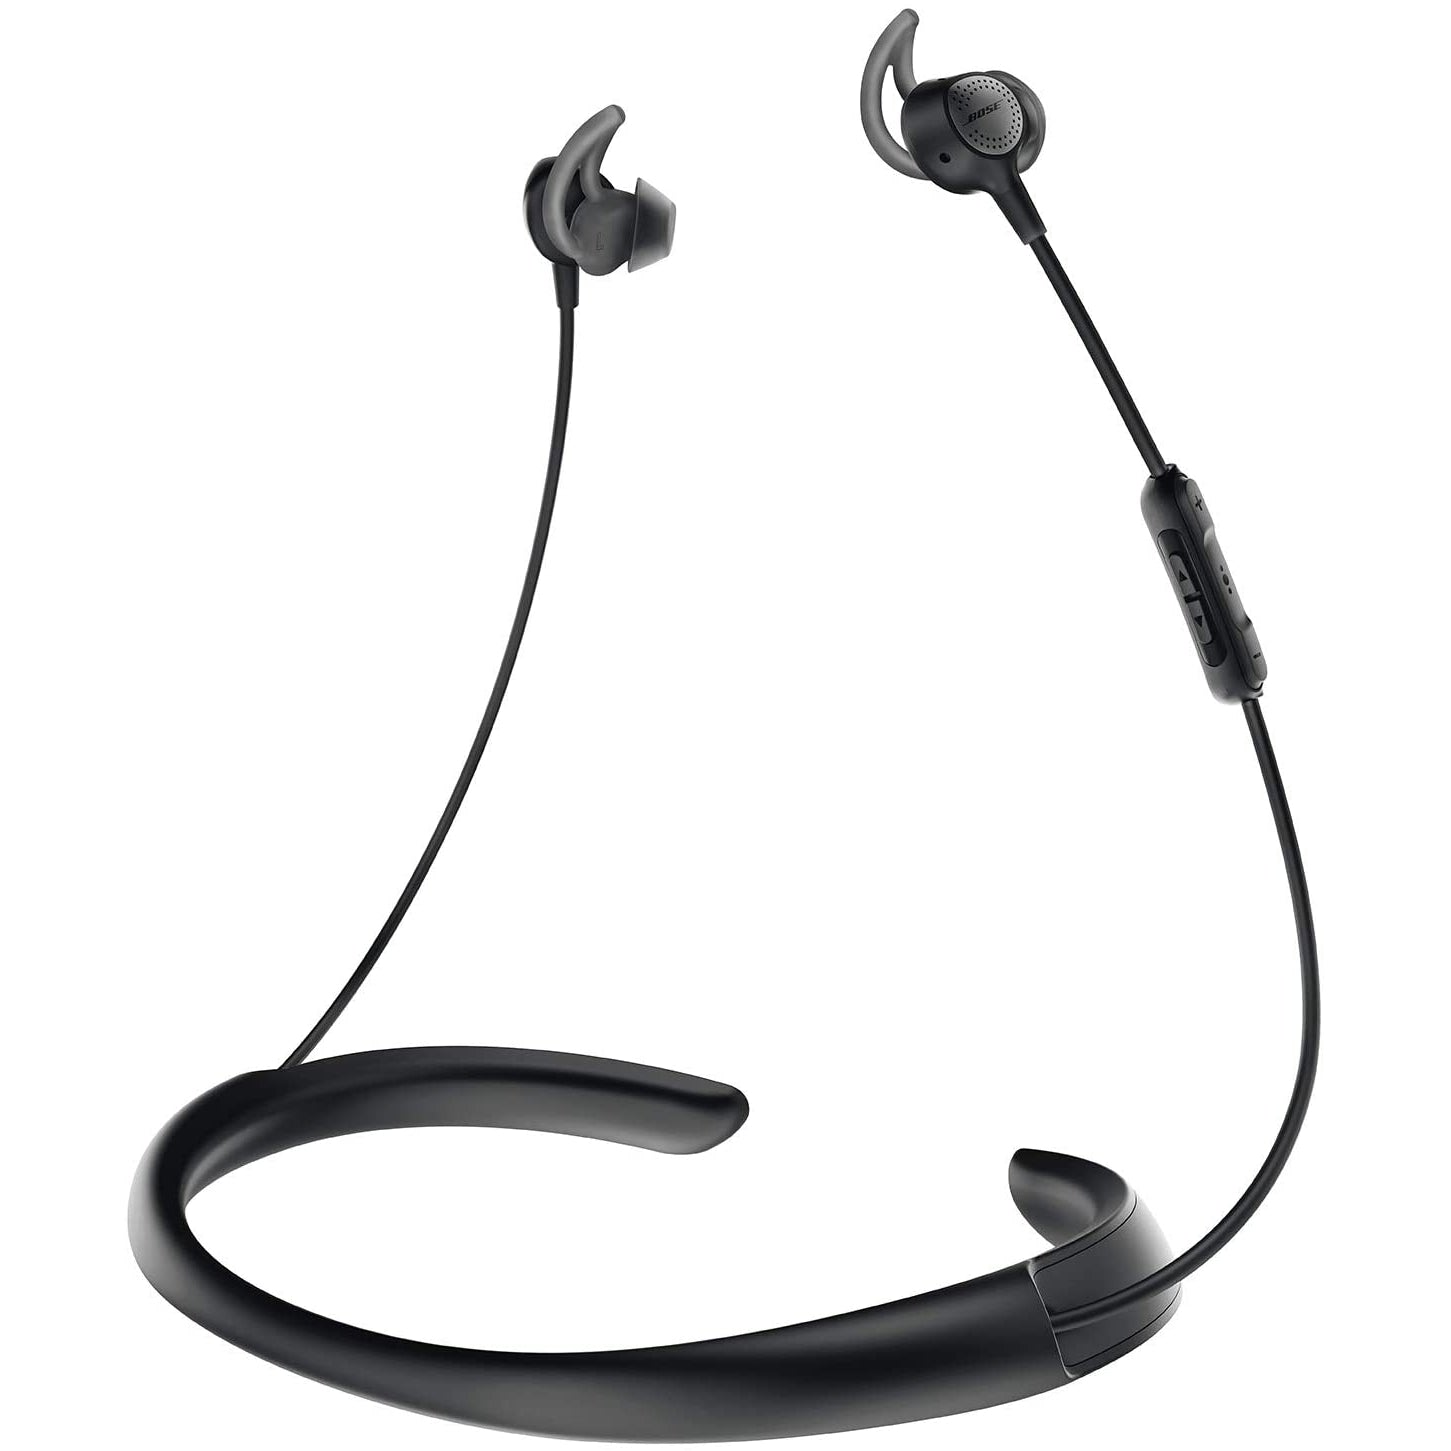 Bose QuietControl 30 Wireless In-Ear Headphones - Black - Refurbished